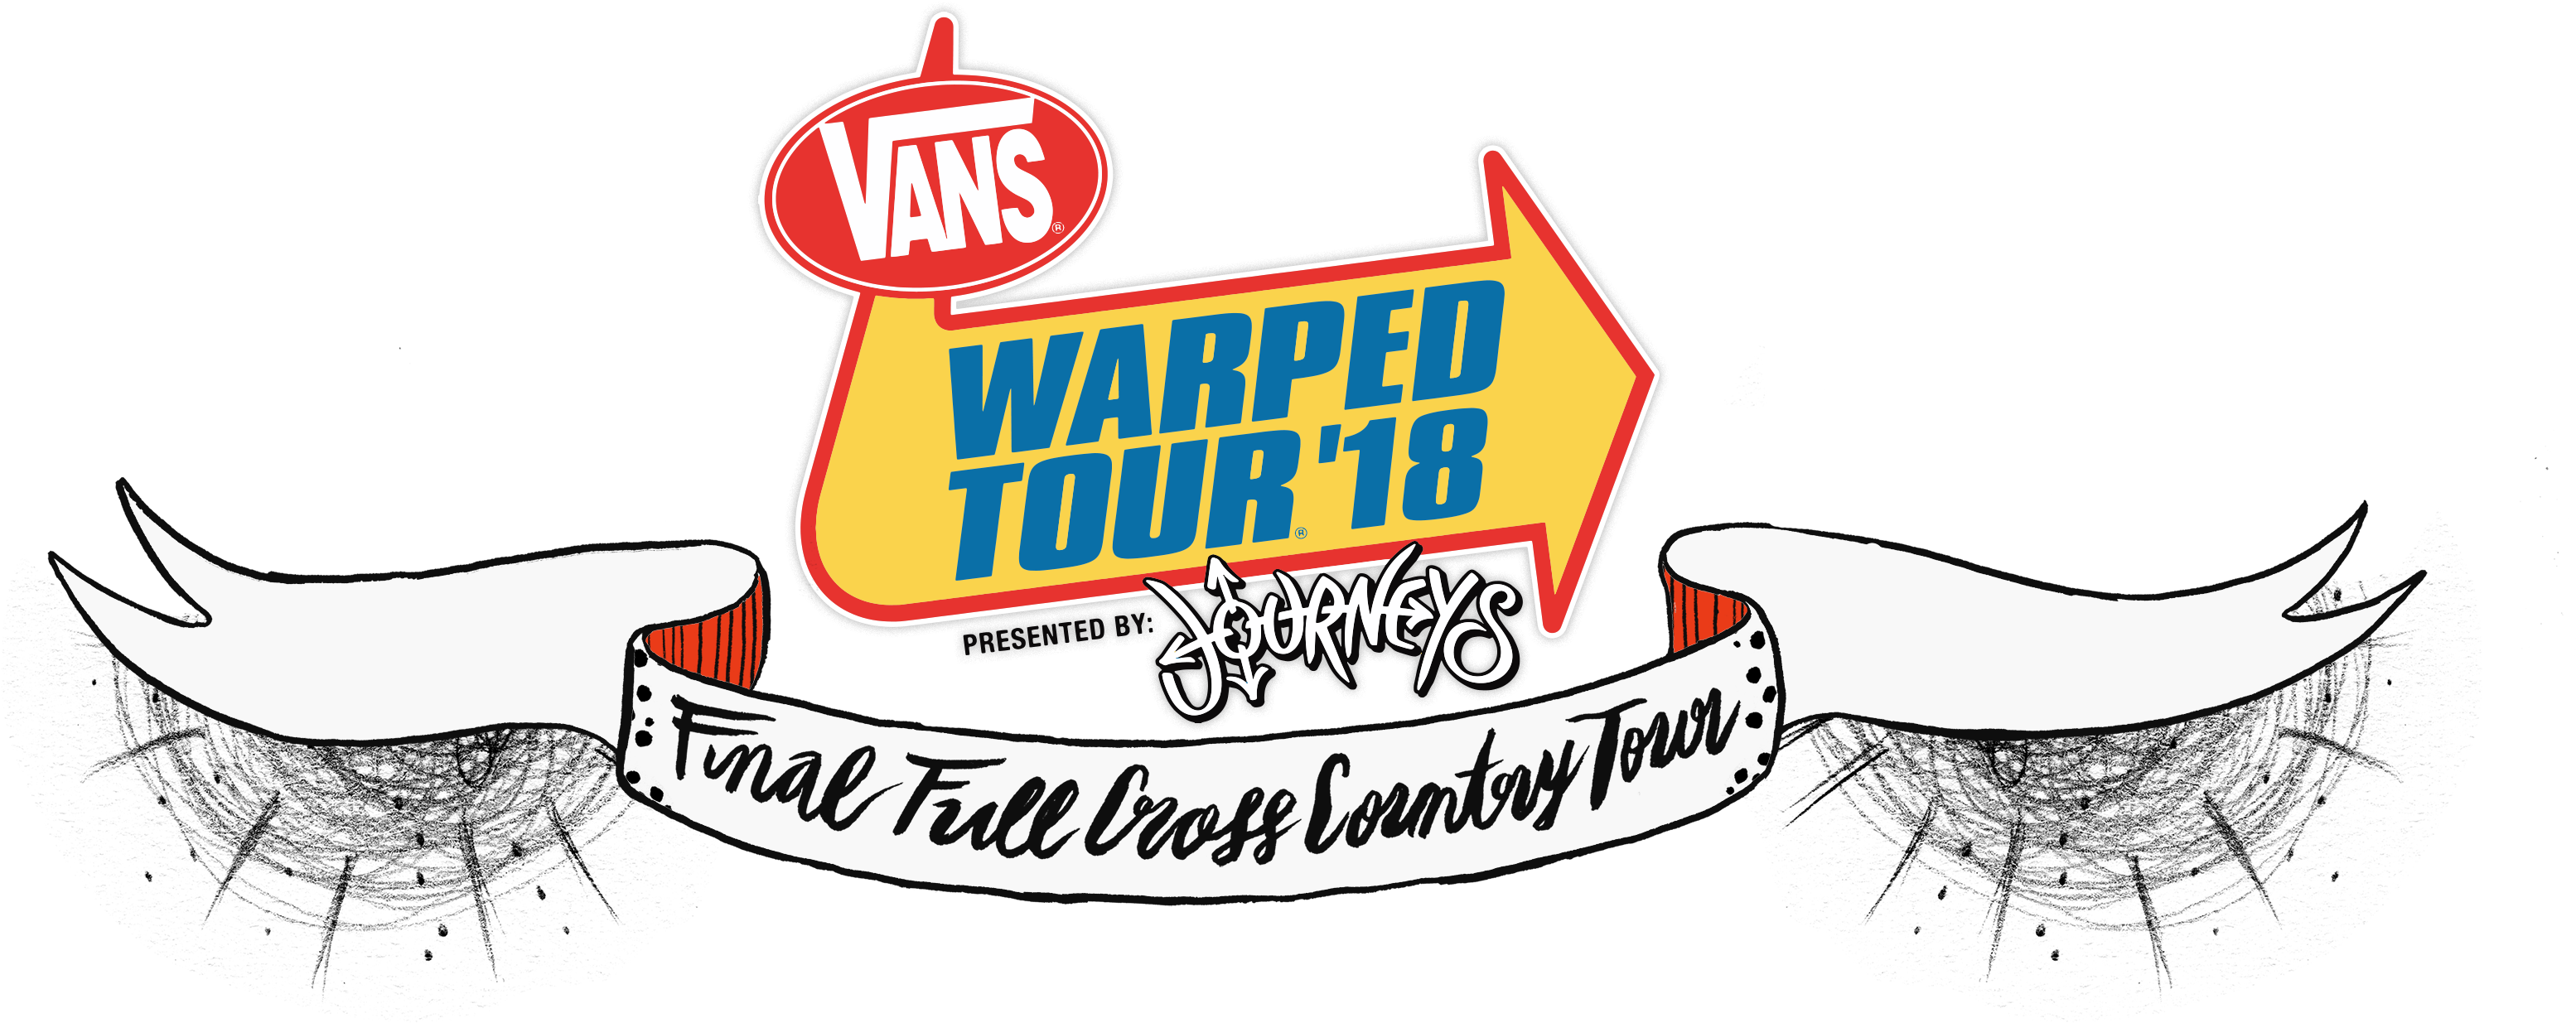 The Vans Warped Tour Final Lineup Announced - Vans Warped Tour 2018 (3300x1327)